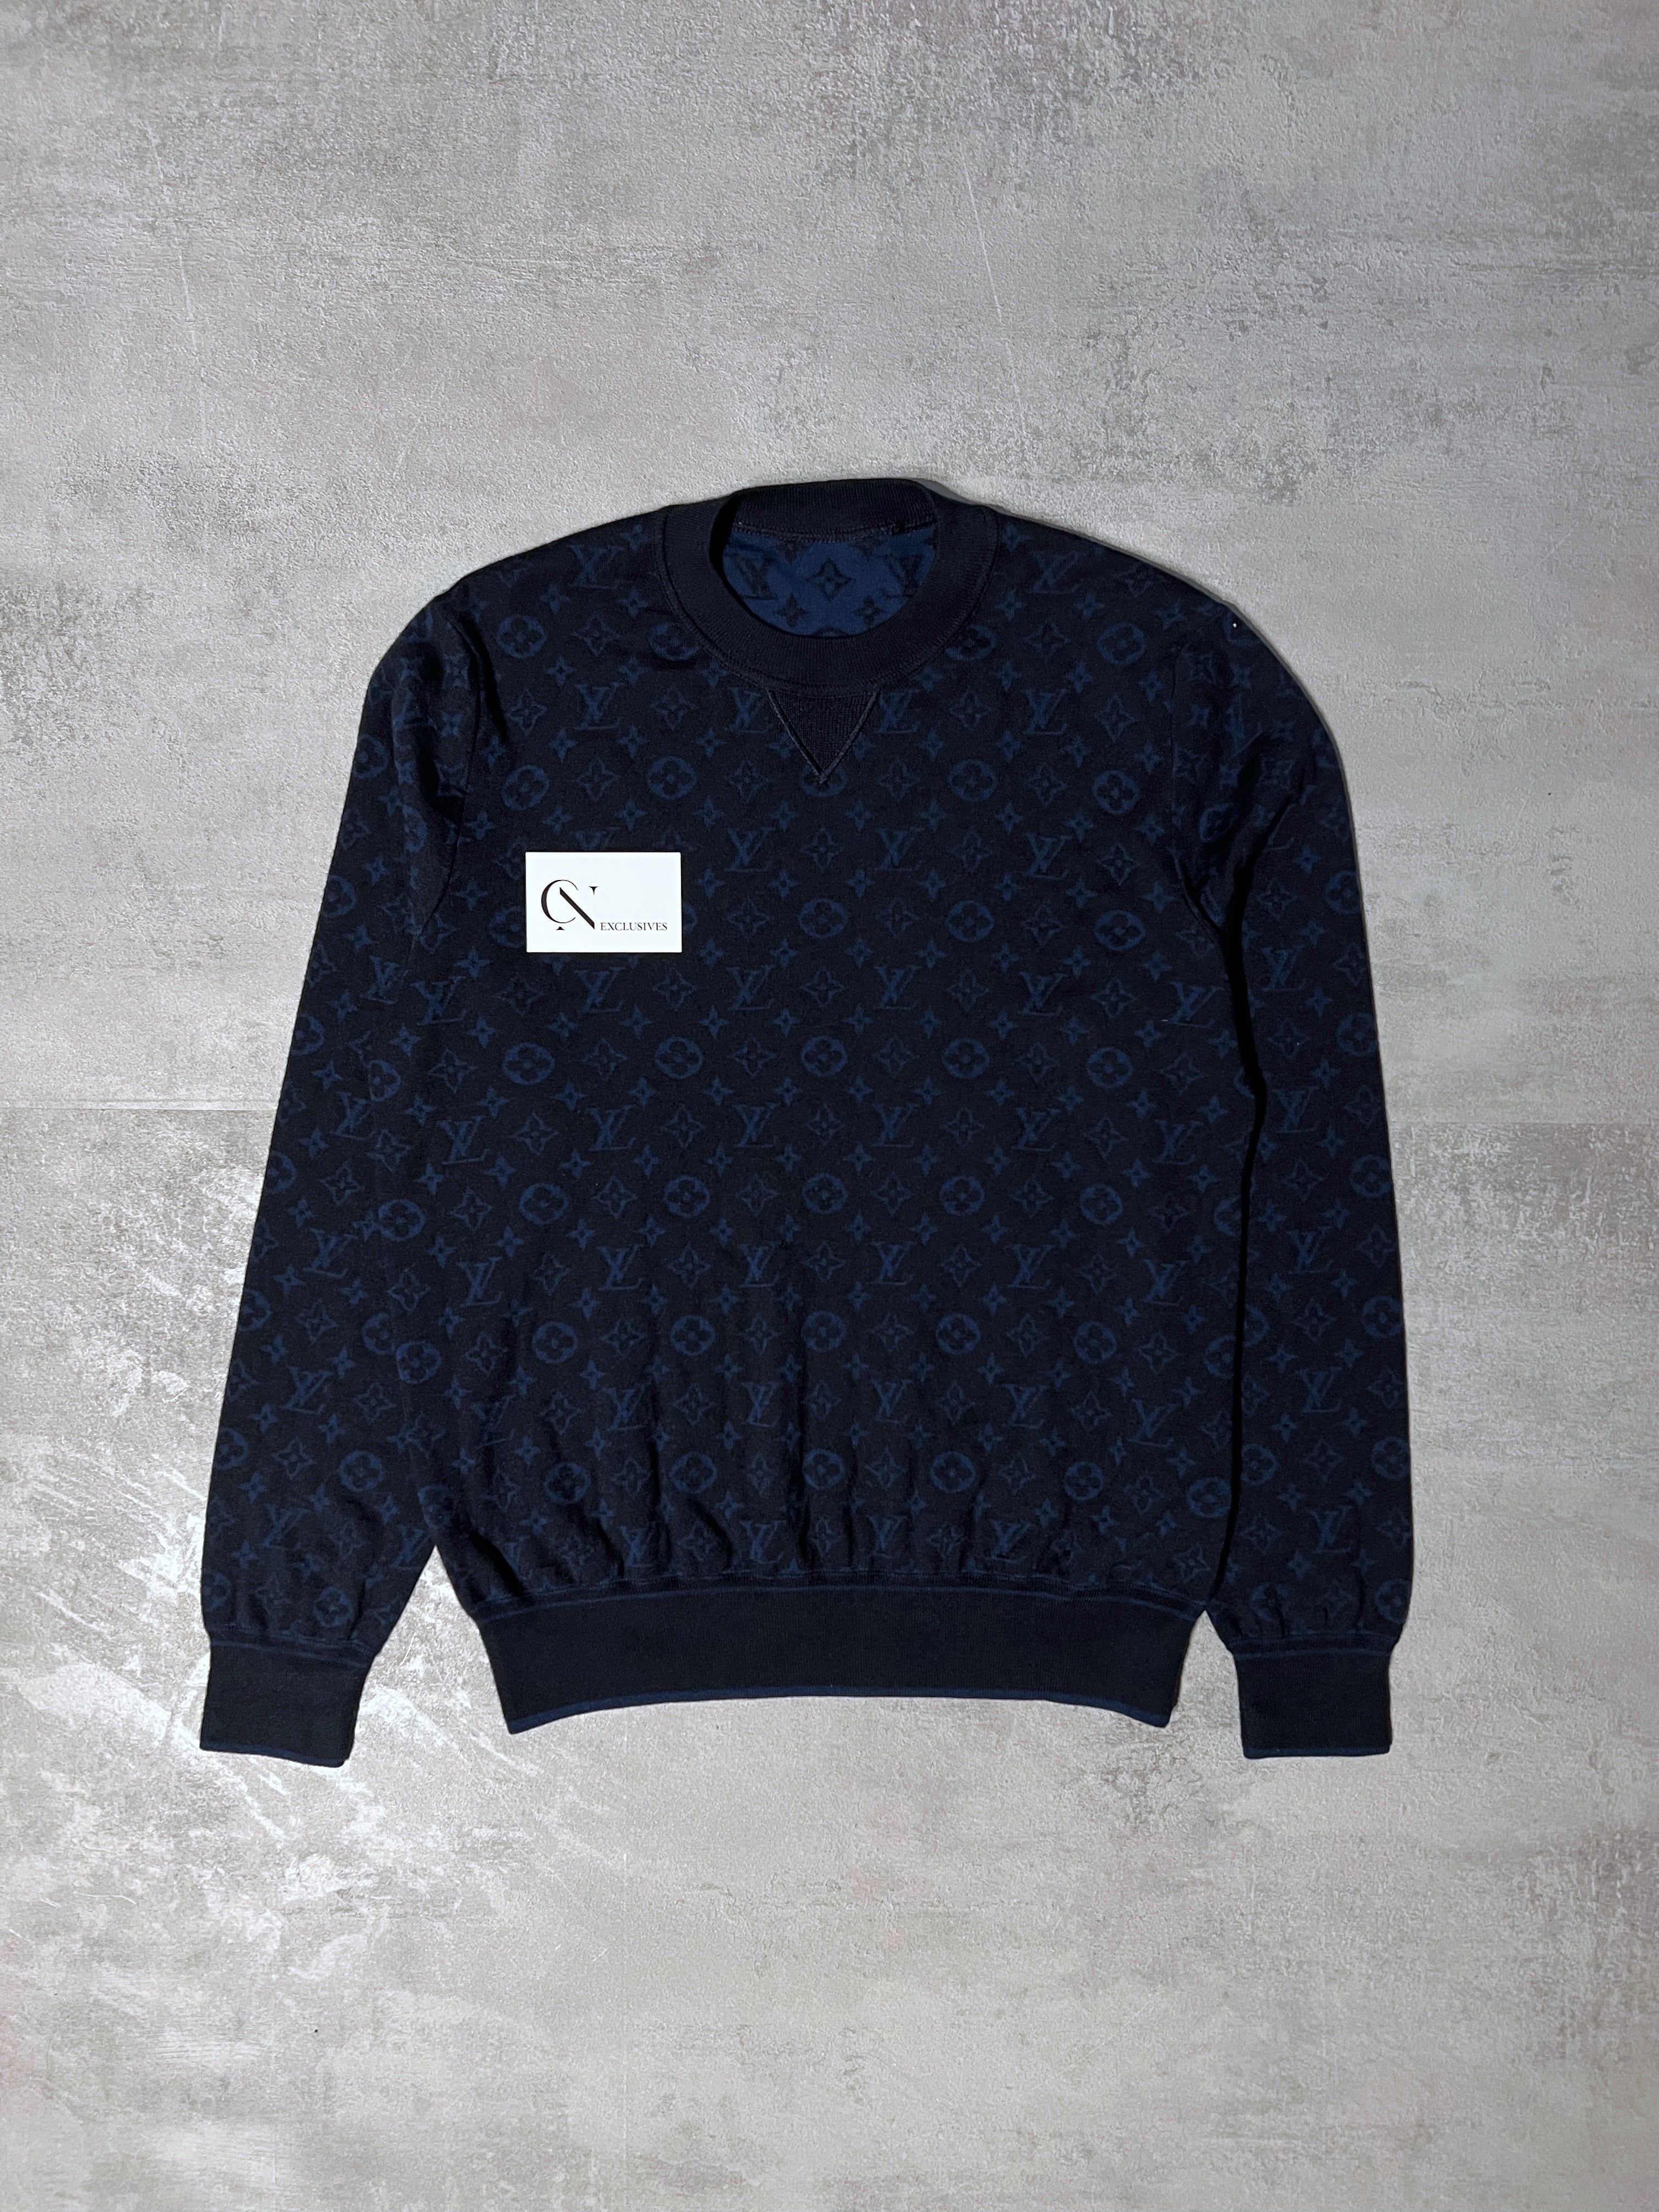 Louis Vuitton Louis Vuitton Monogram sweater